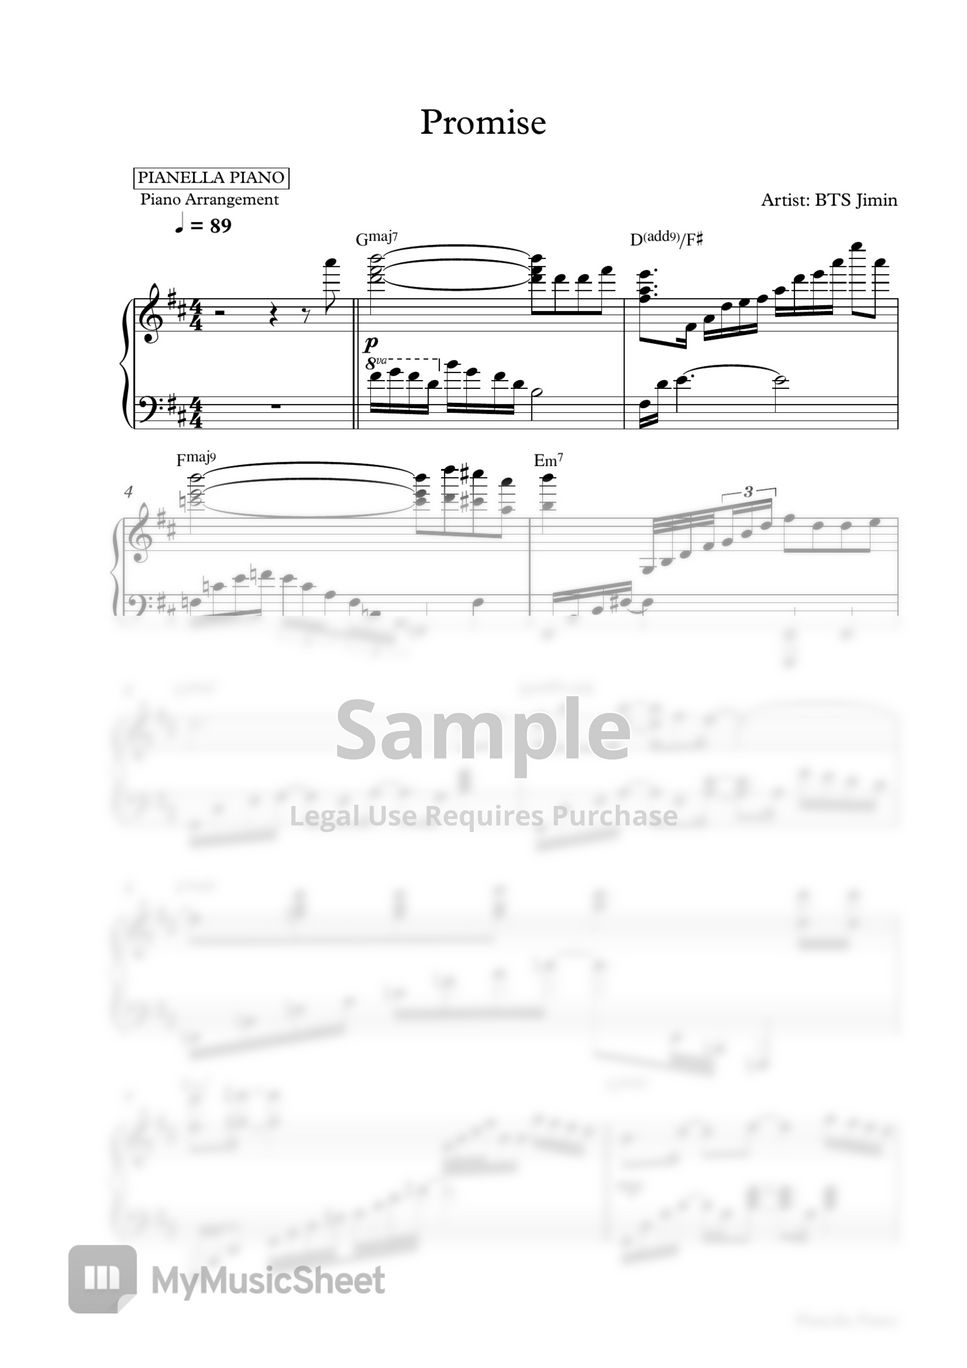 BTS Jimin - Promise (Piano Sheet) by Pianella Piano